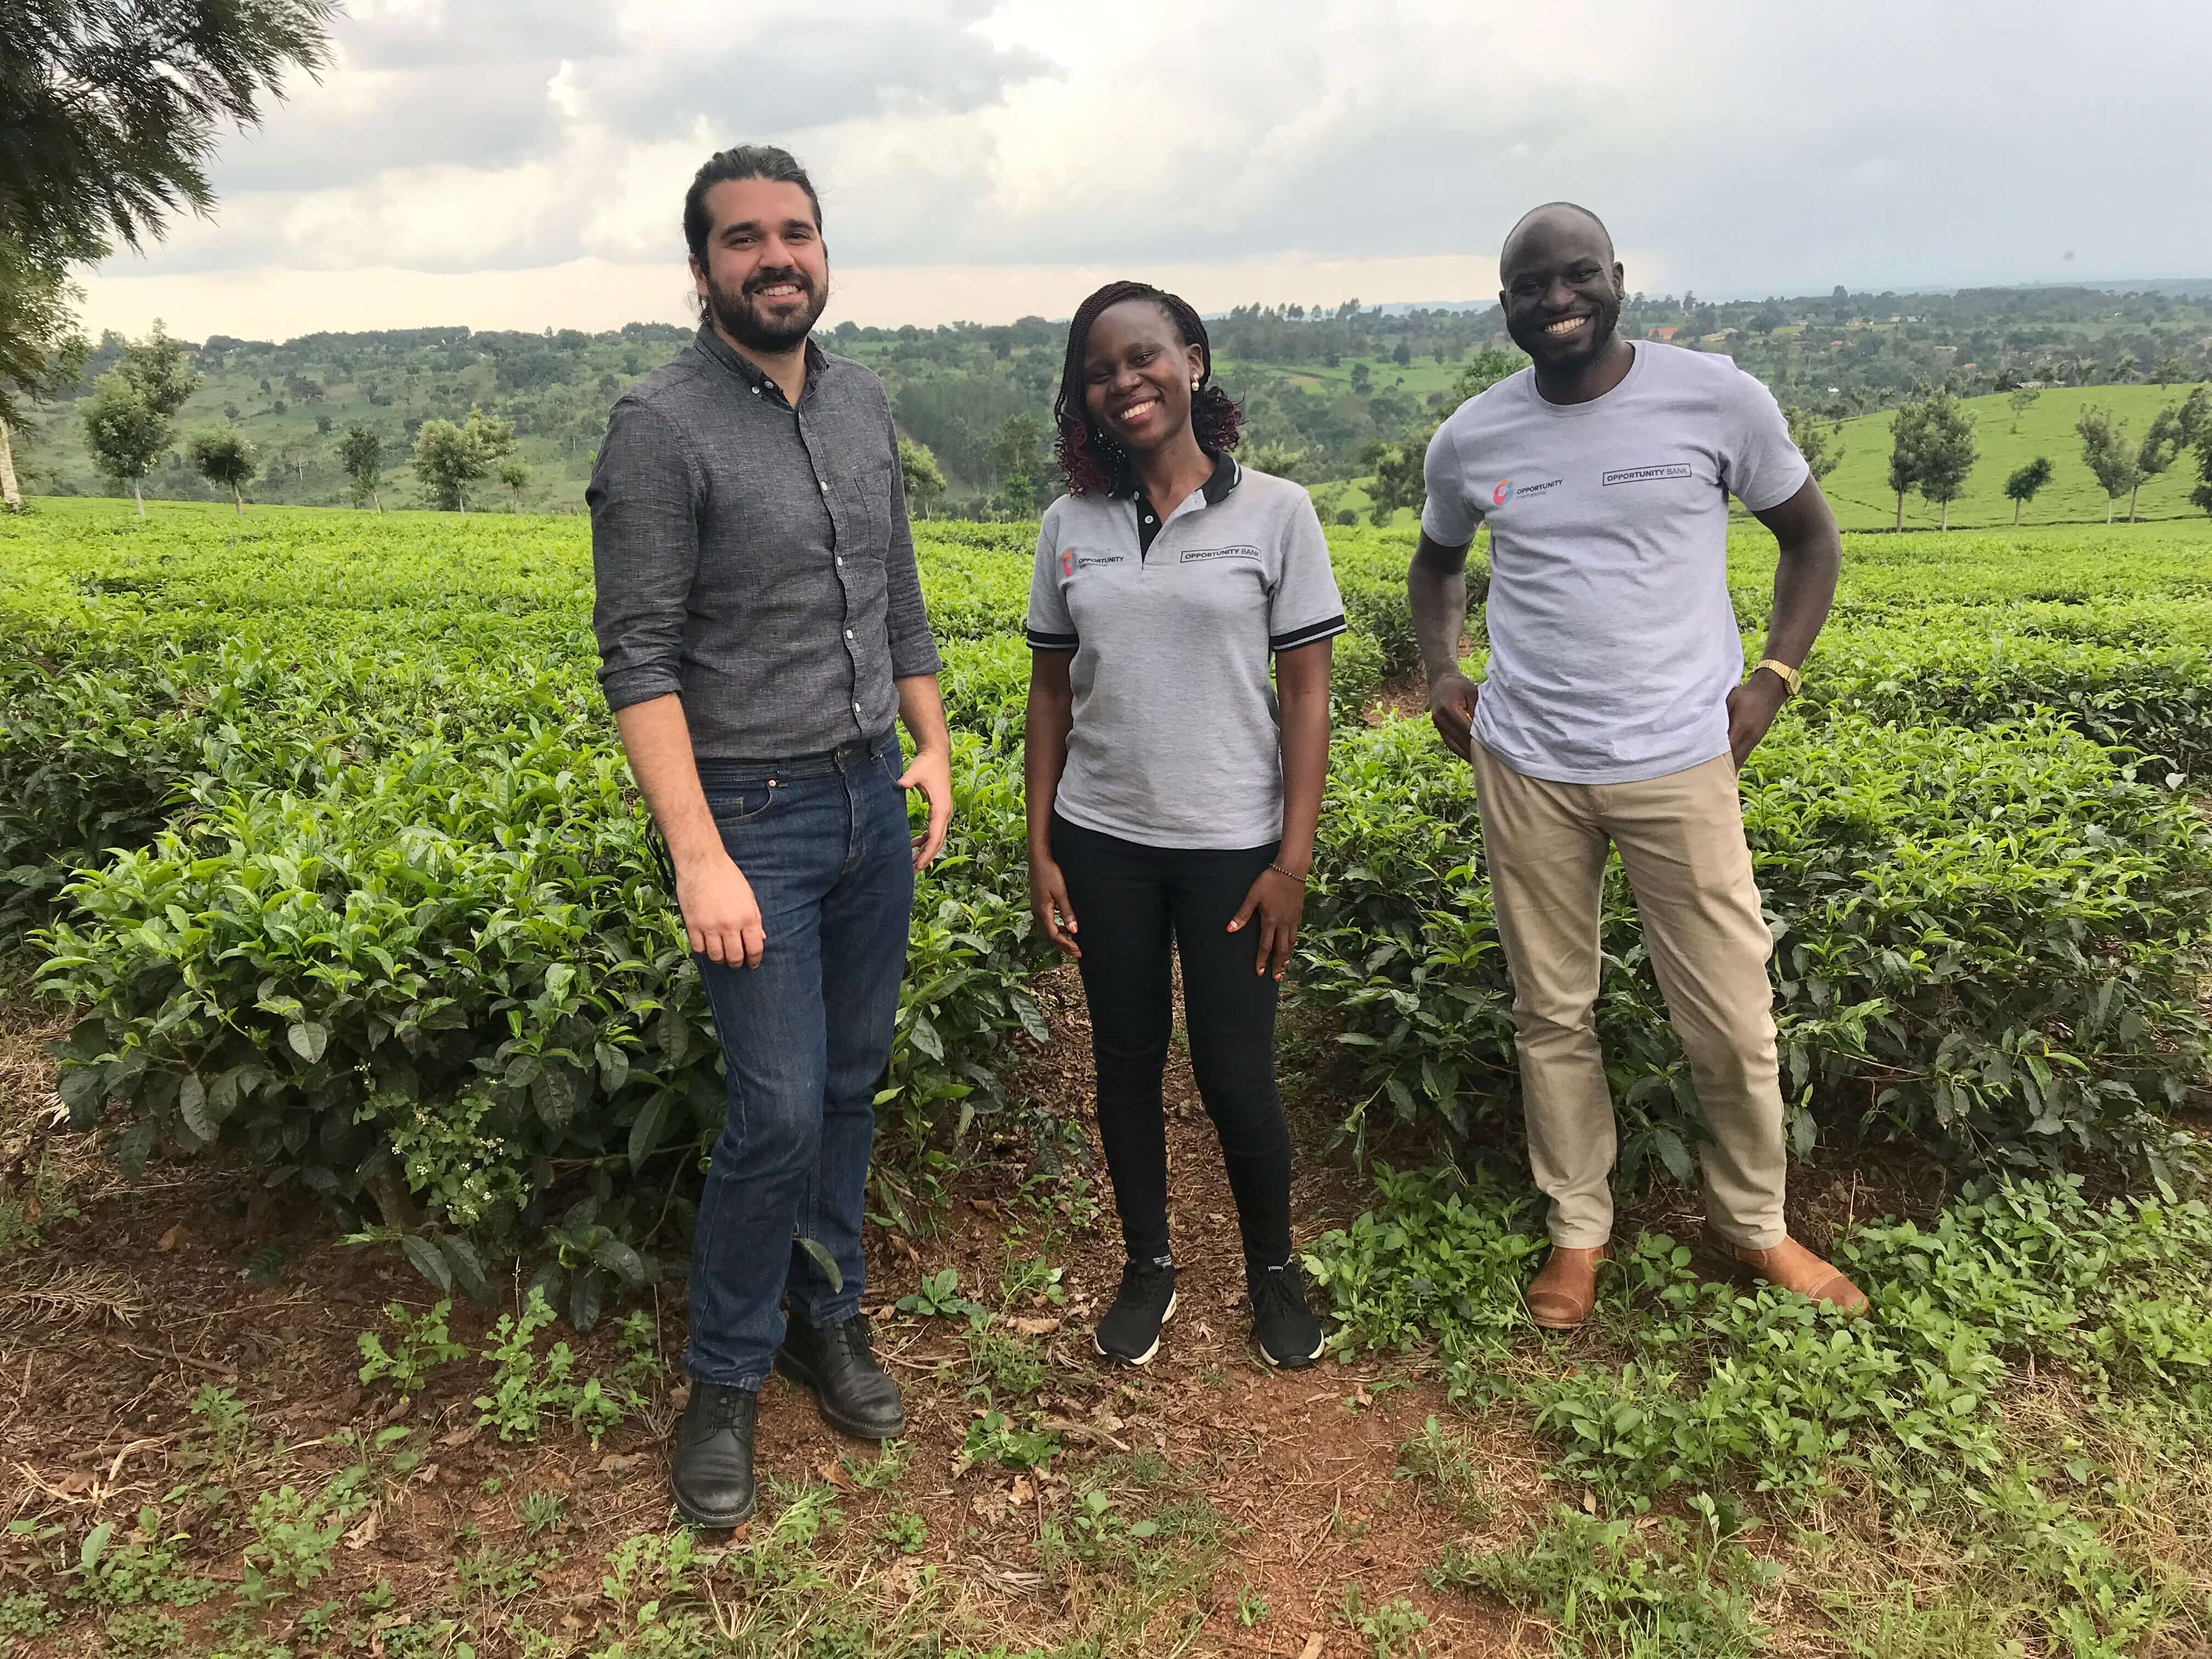 From left to right: Kyle Fiechter, Program Manager, Opportunity International US, Alice, Program Manager, Opportunity International Africa, and Ibrahim, Opportunity Bank Uganda, Ltd.